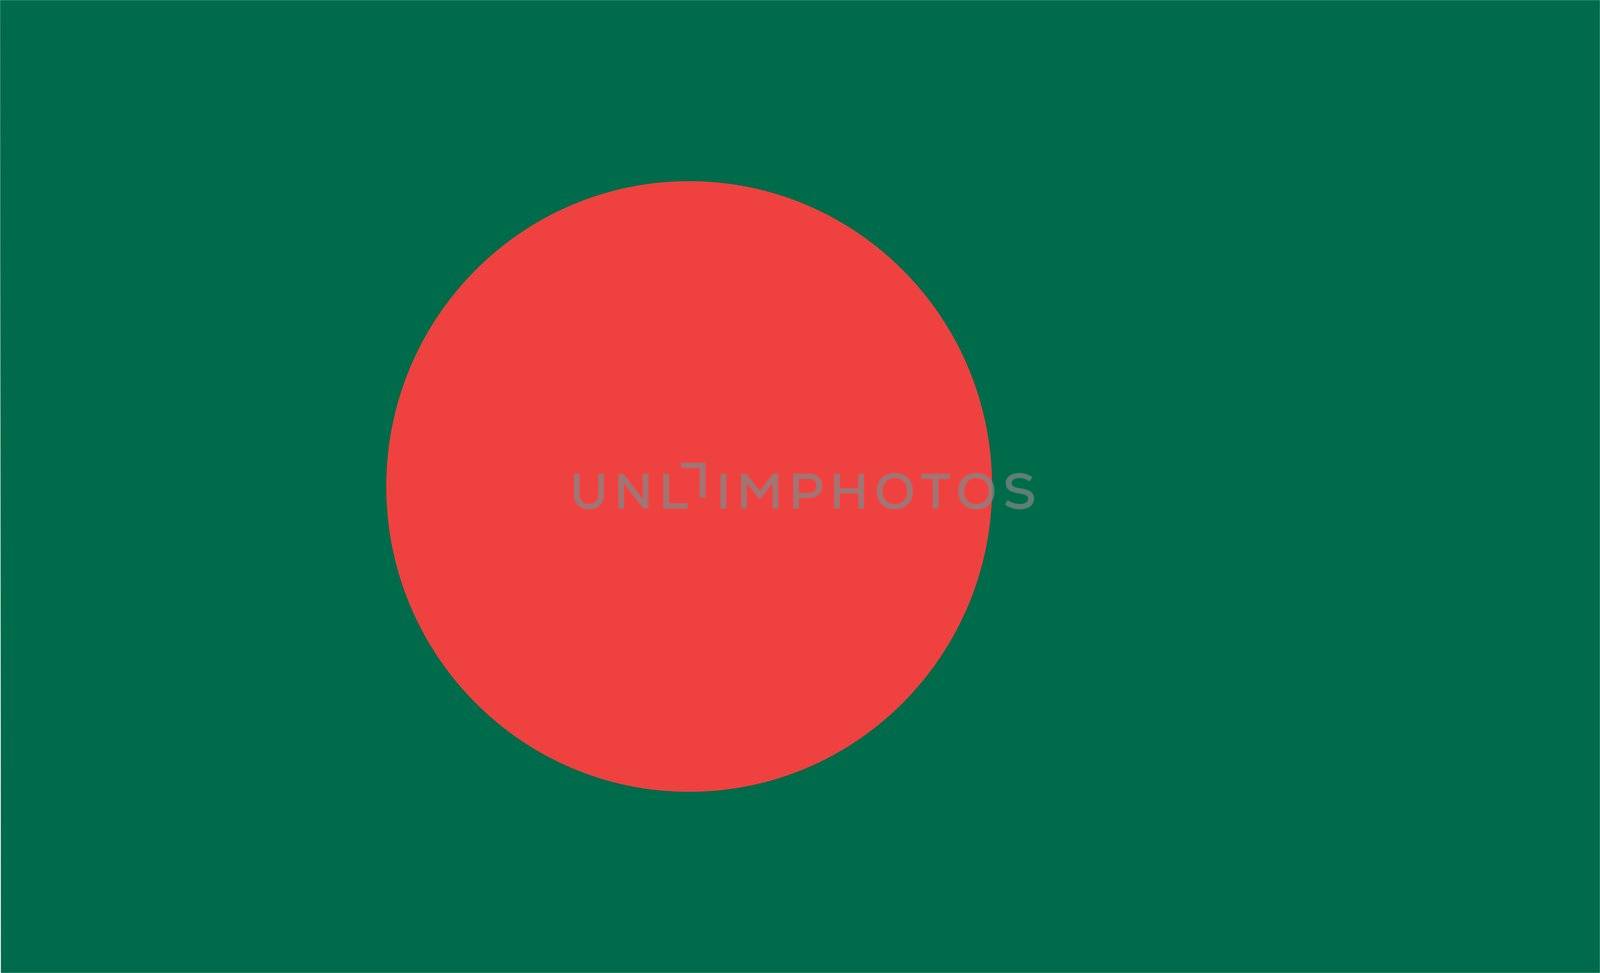 Bangladesh Flag by tony4urban